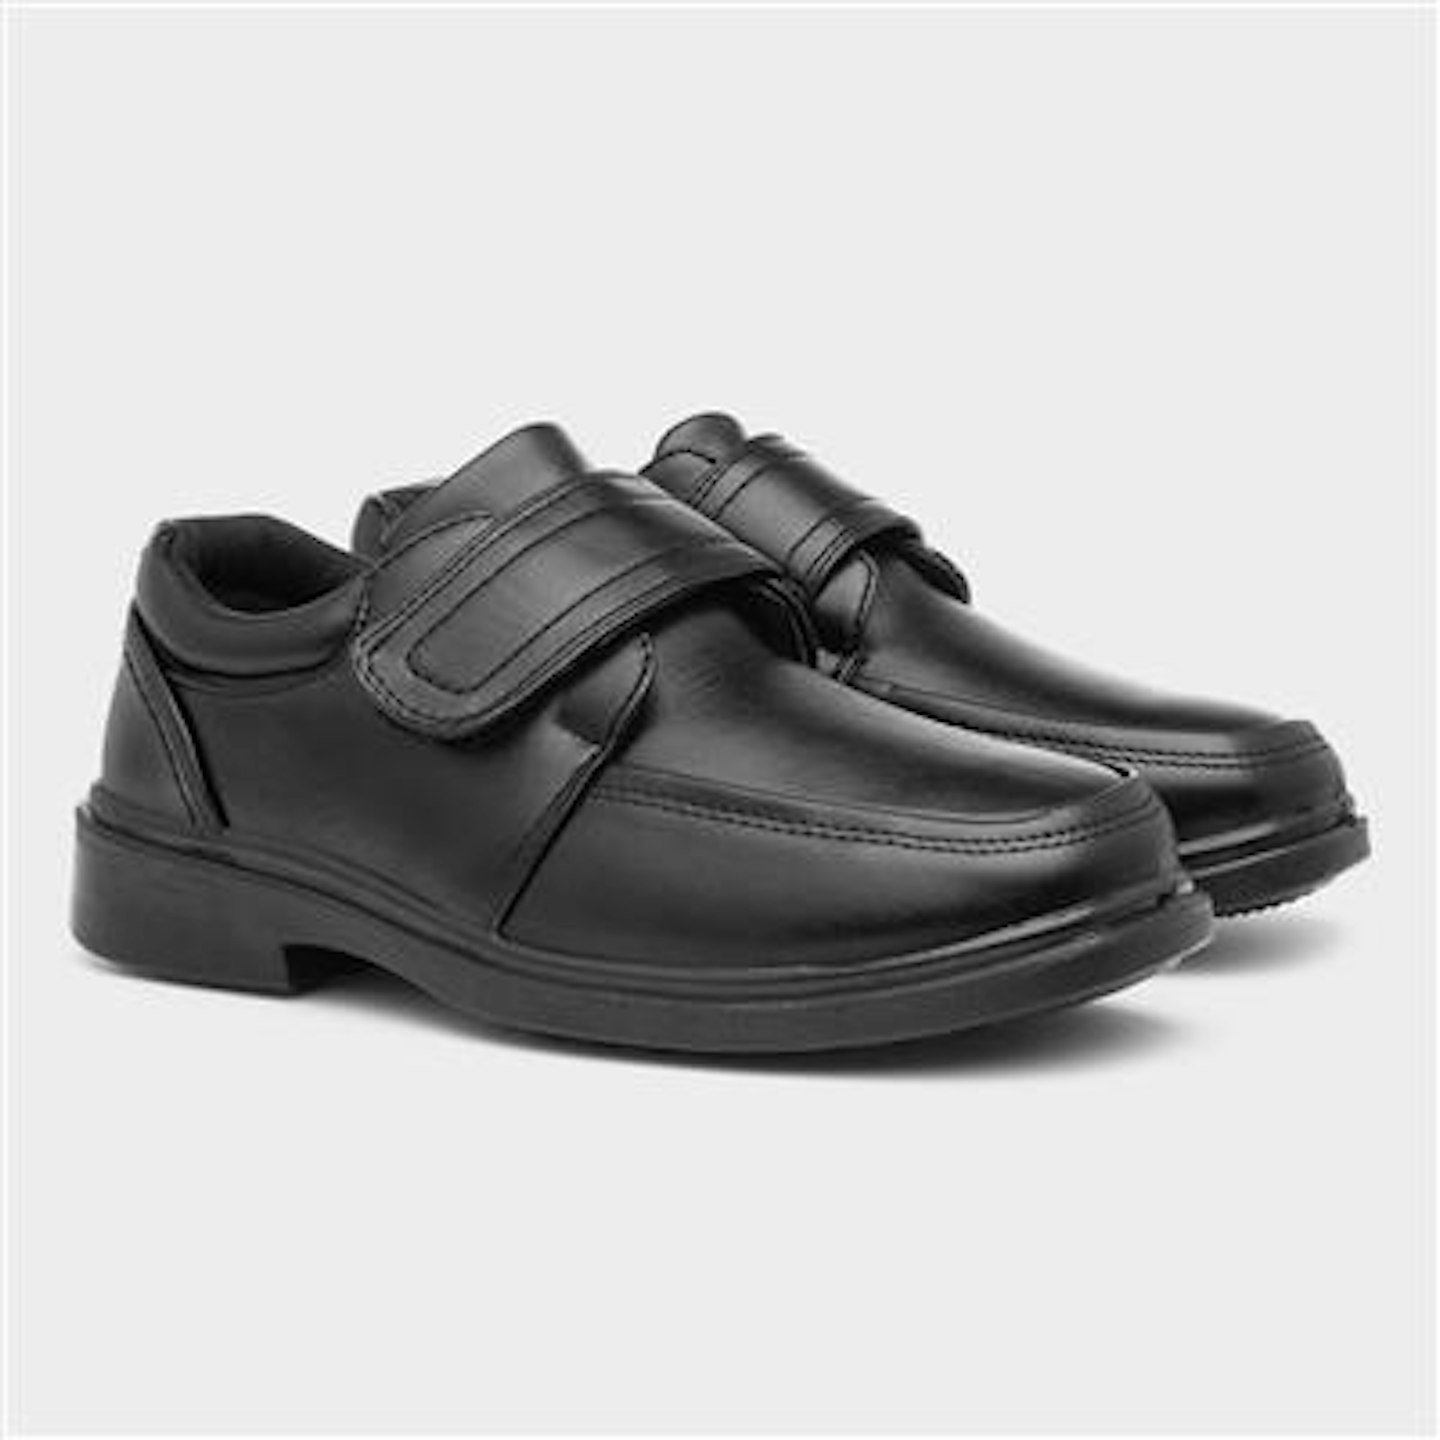 Beckett Boys Black Touch Fasten Formal Shoe